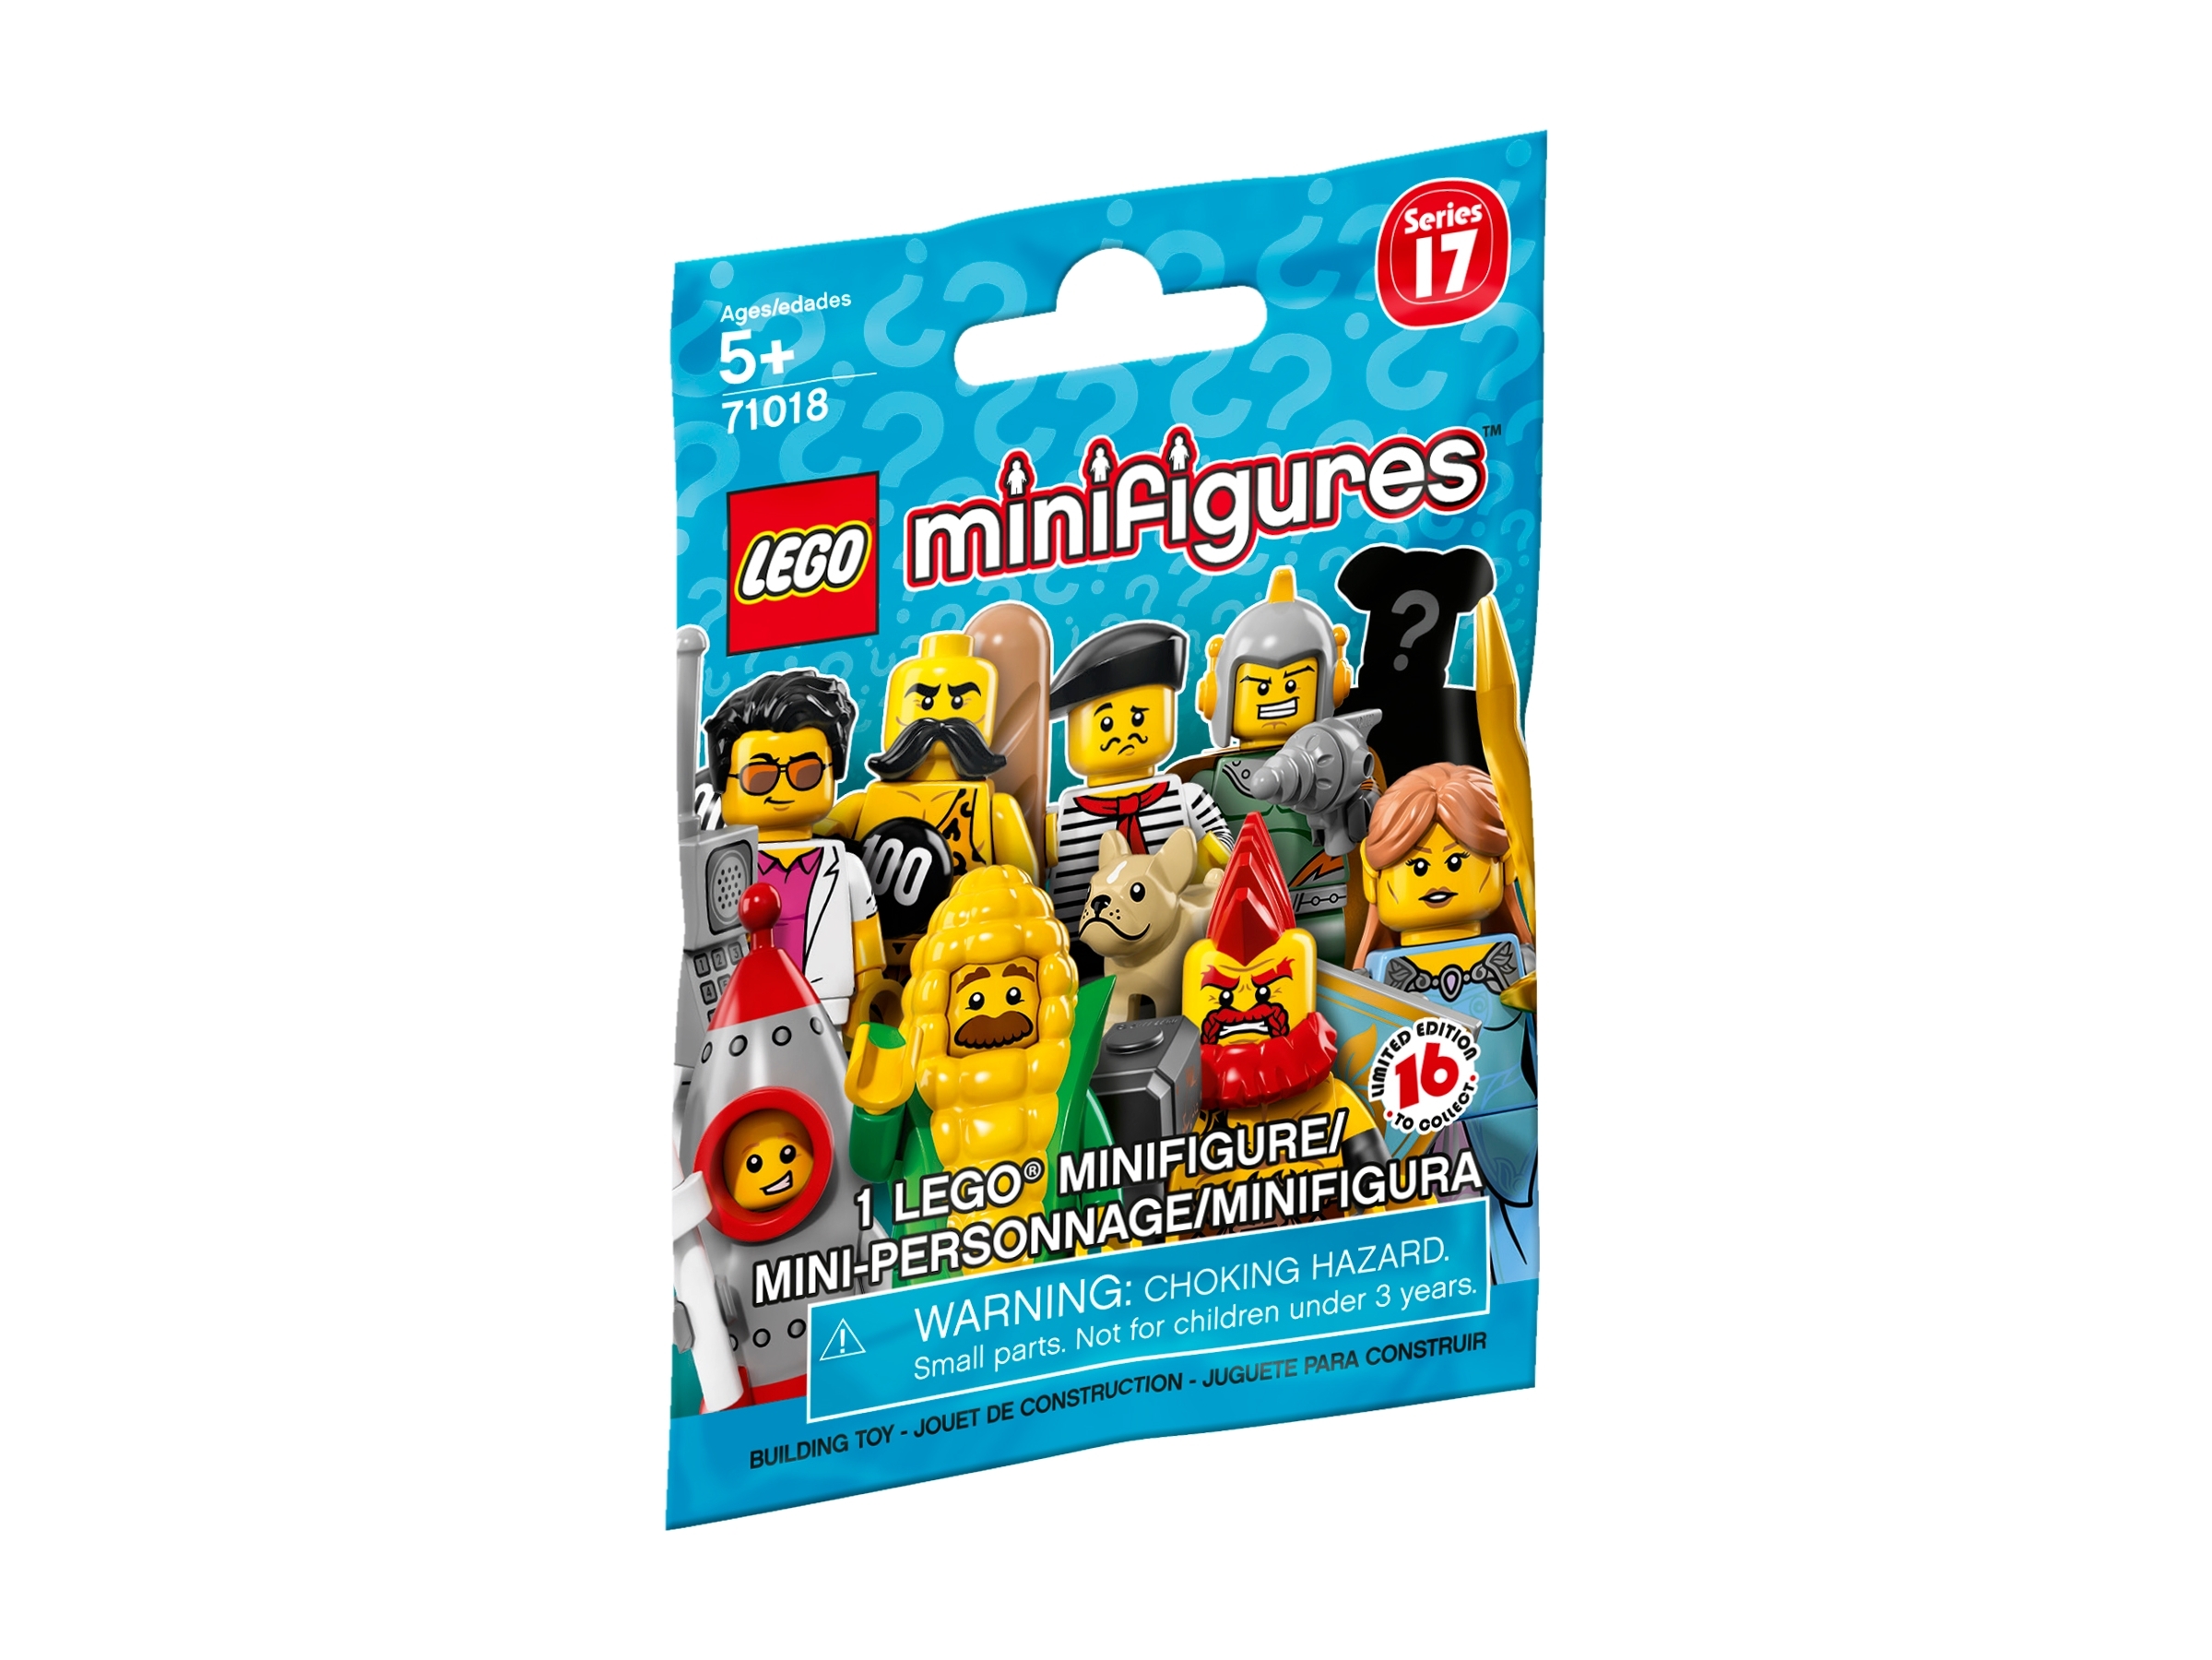 LEGO Minifigure Series 17 Minifigures 71018 